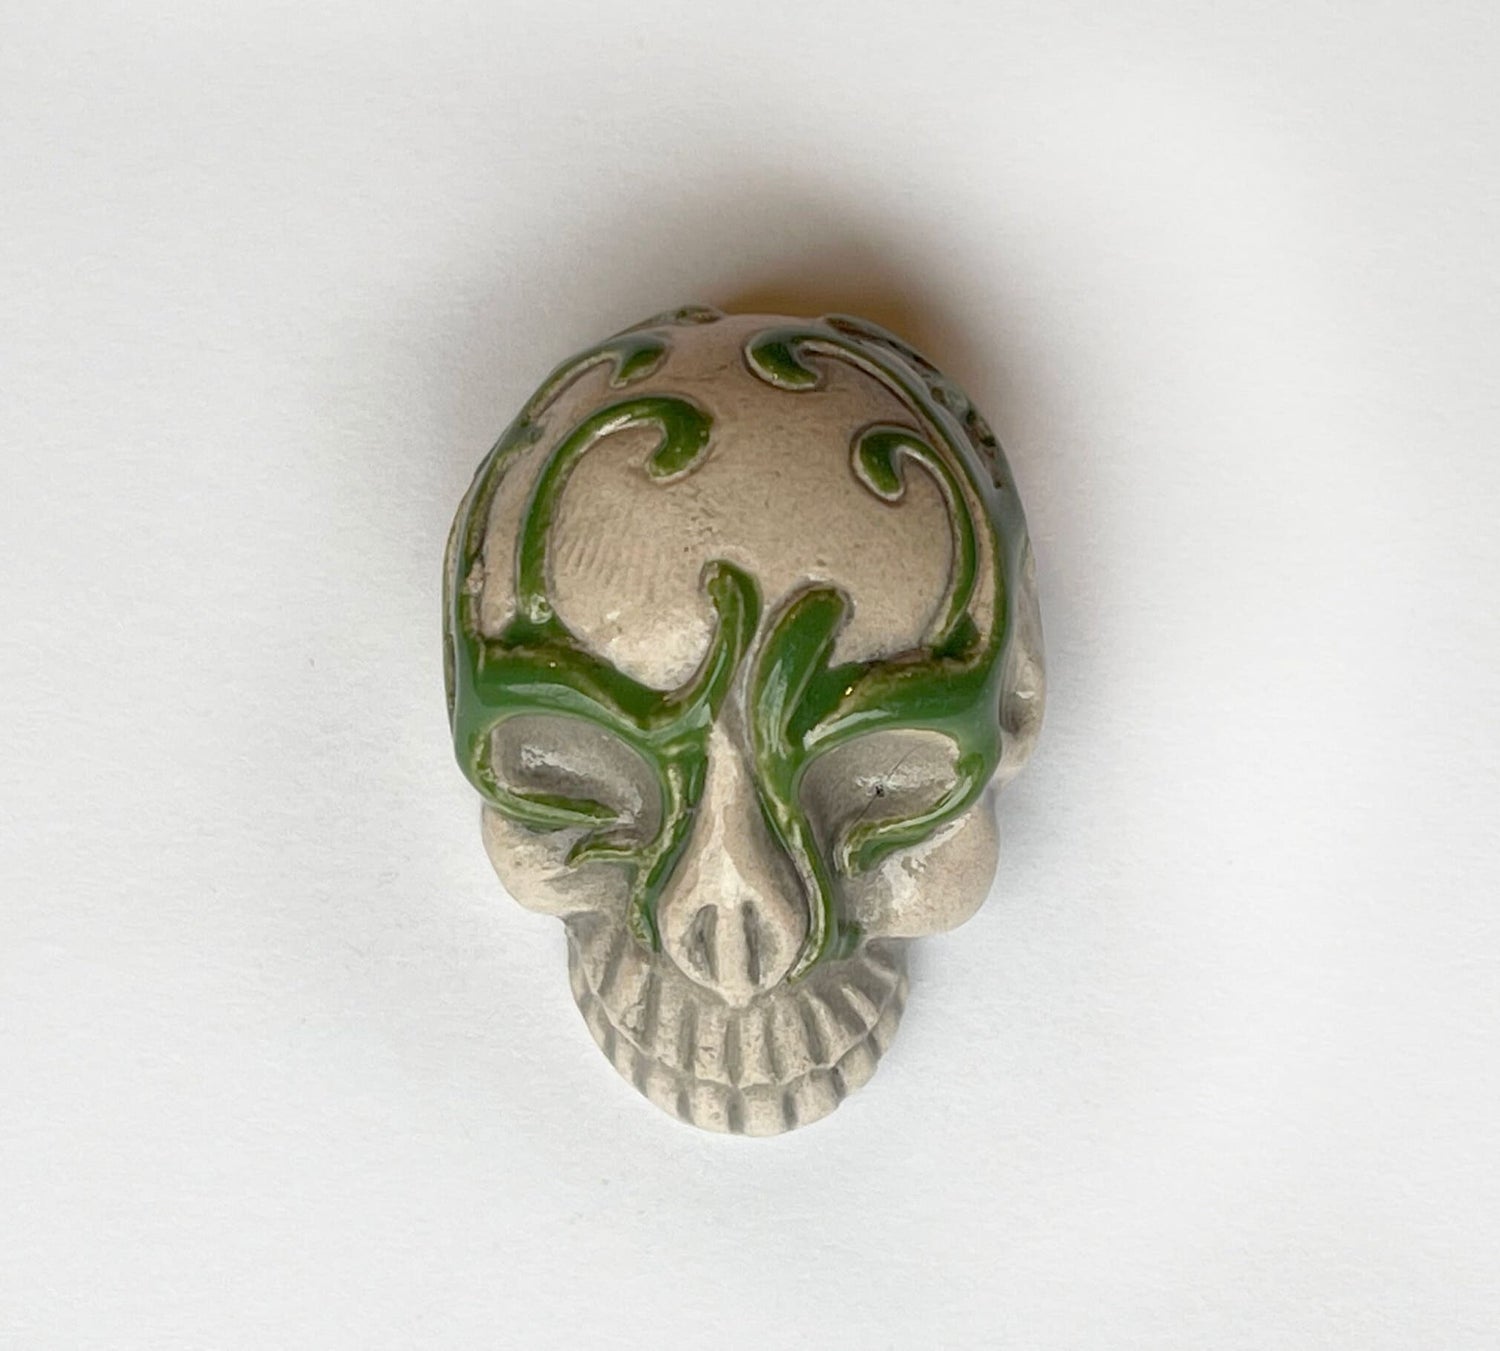 Sugar Skull Focal Bead Pendant-LIMITED EDITION-Dia de los Muertos, Day of the Dead-handmade ceramic bead charm pendant